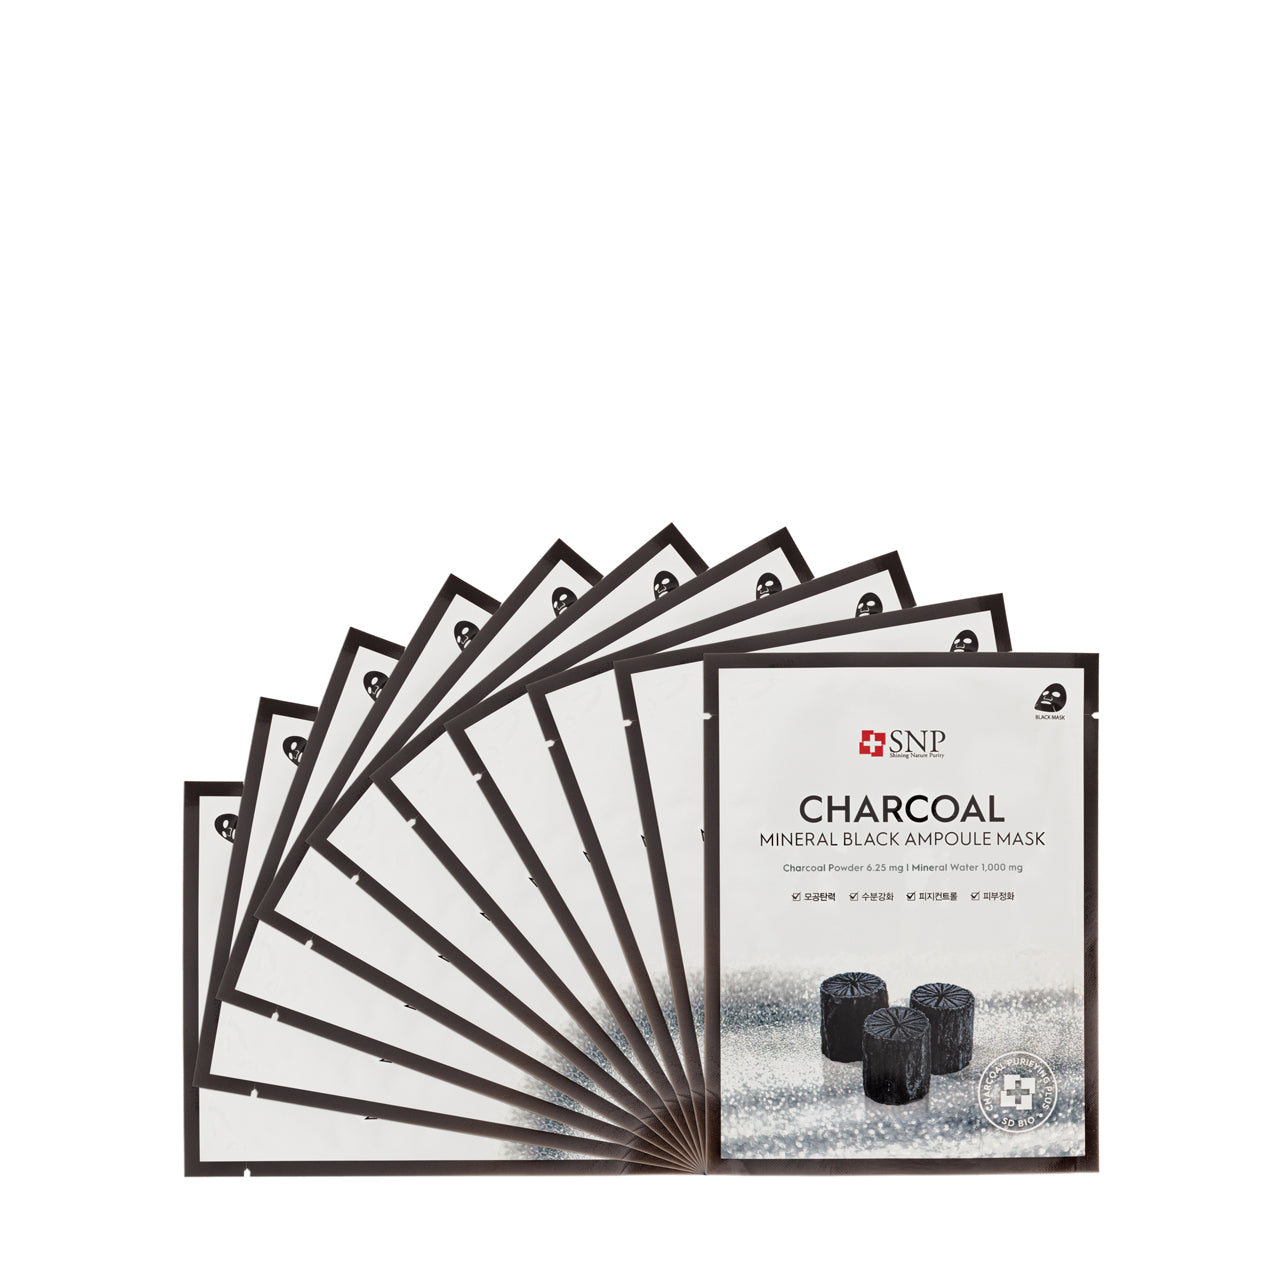 Snp Charcoal Mineral Black Ampoule Mask 10PCS | Sasa Global eShop